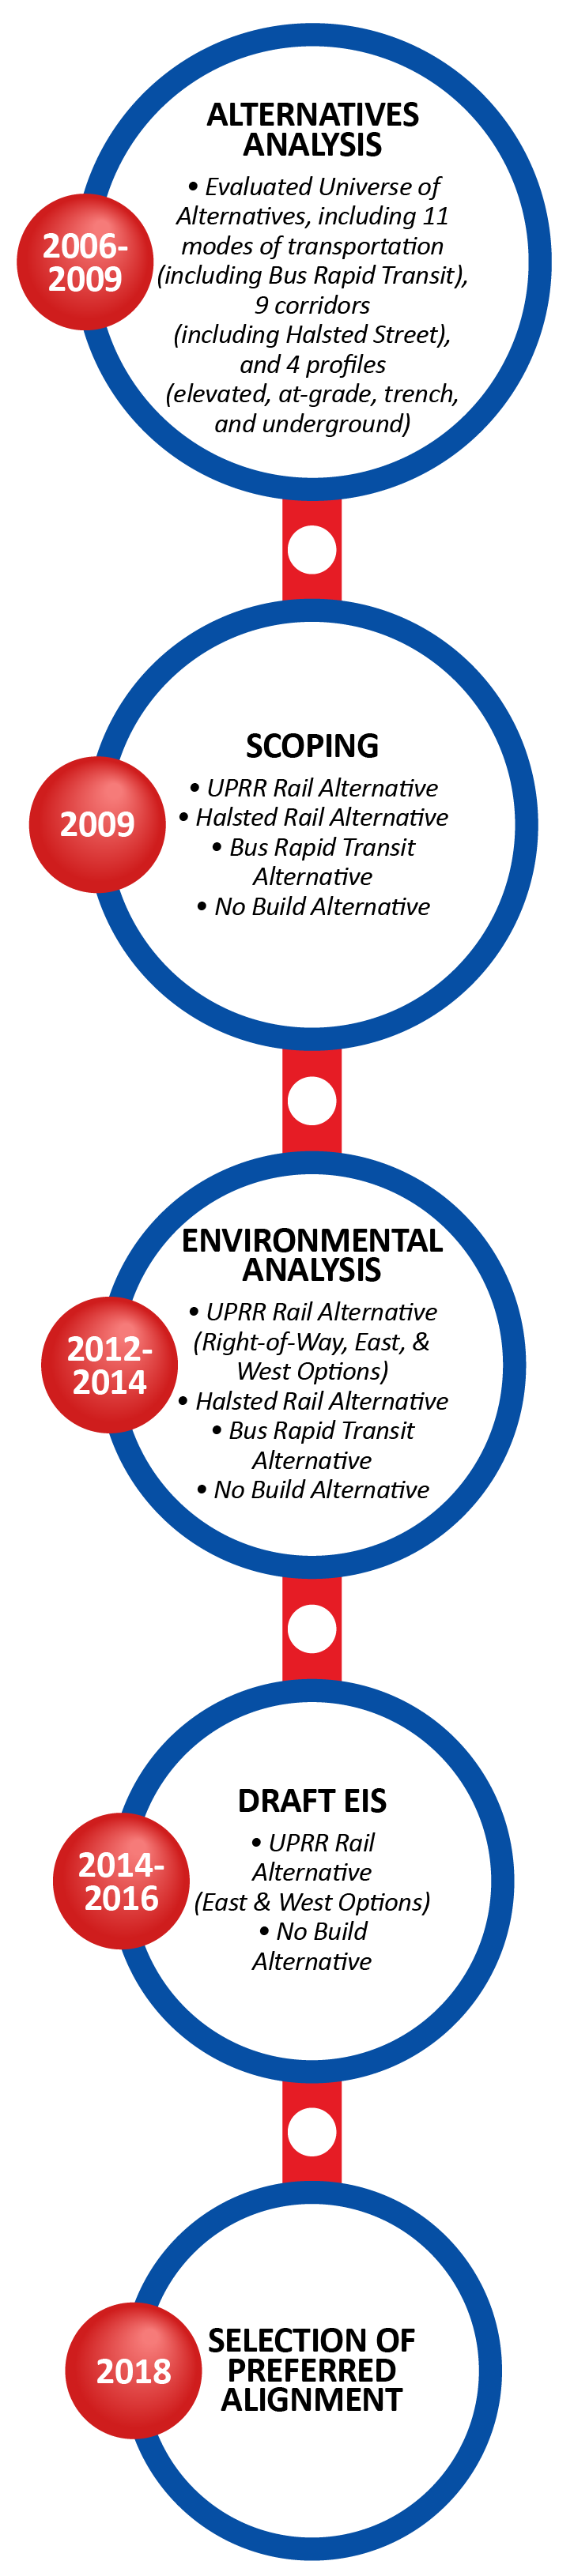 RLE Preferred Alignment Timeline. 2006 - 2009: Alternative Analysis. 2009: Scoping.  2012 - 2014: Environmental Analysis. 2014 - 2016: Draft EIS. 2018: Selection of Preferred Alignment.